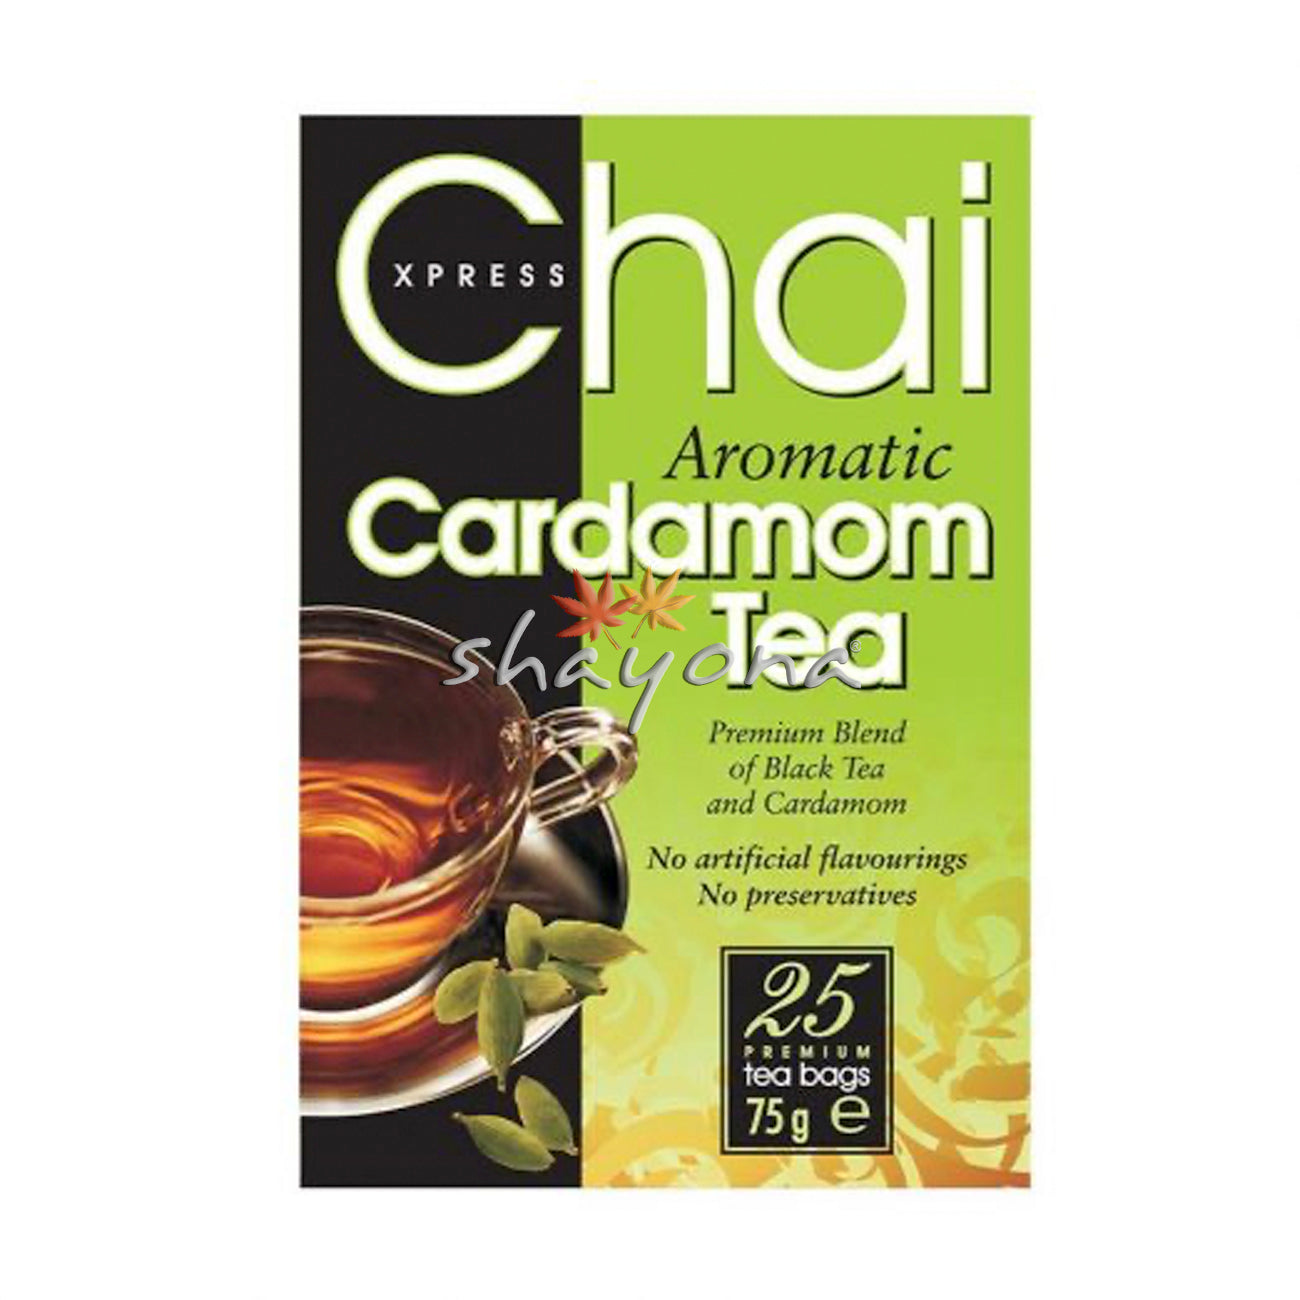 Chai Xpress Cardamom Tea Bags